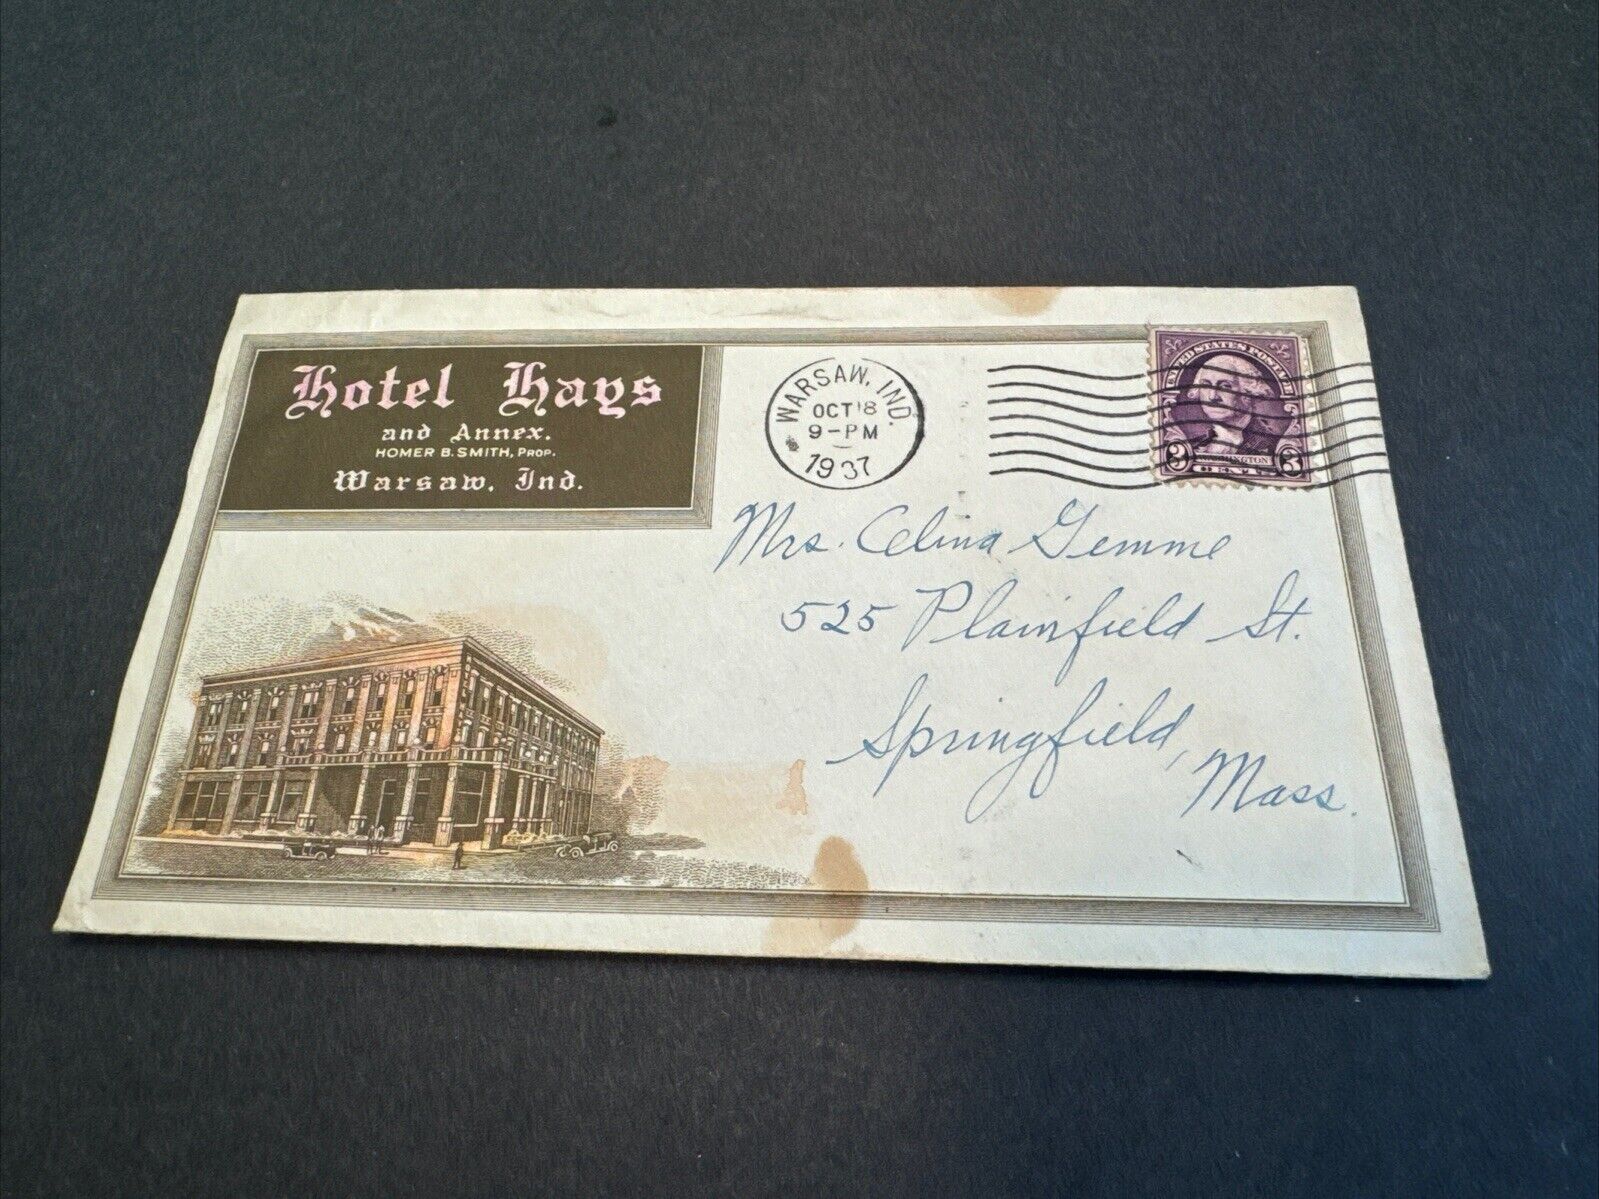 1937 Warsaw Indiana Hotel Hays envelope